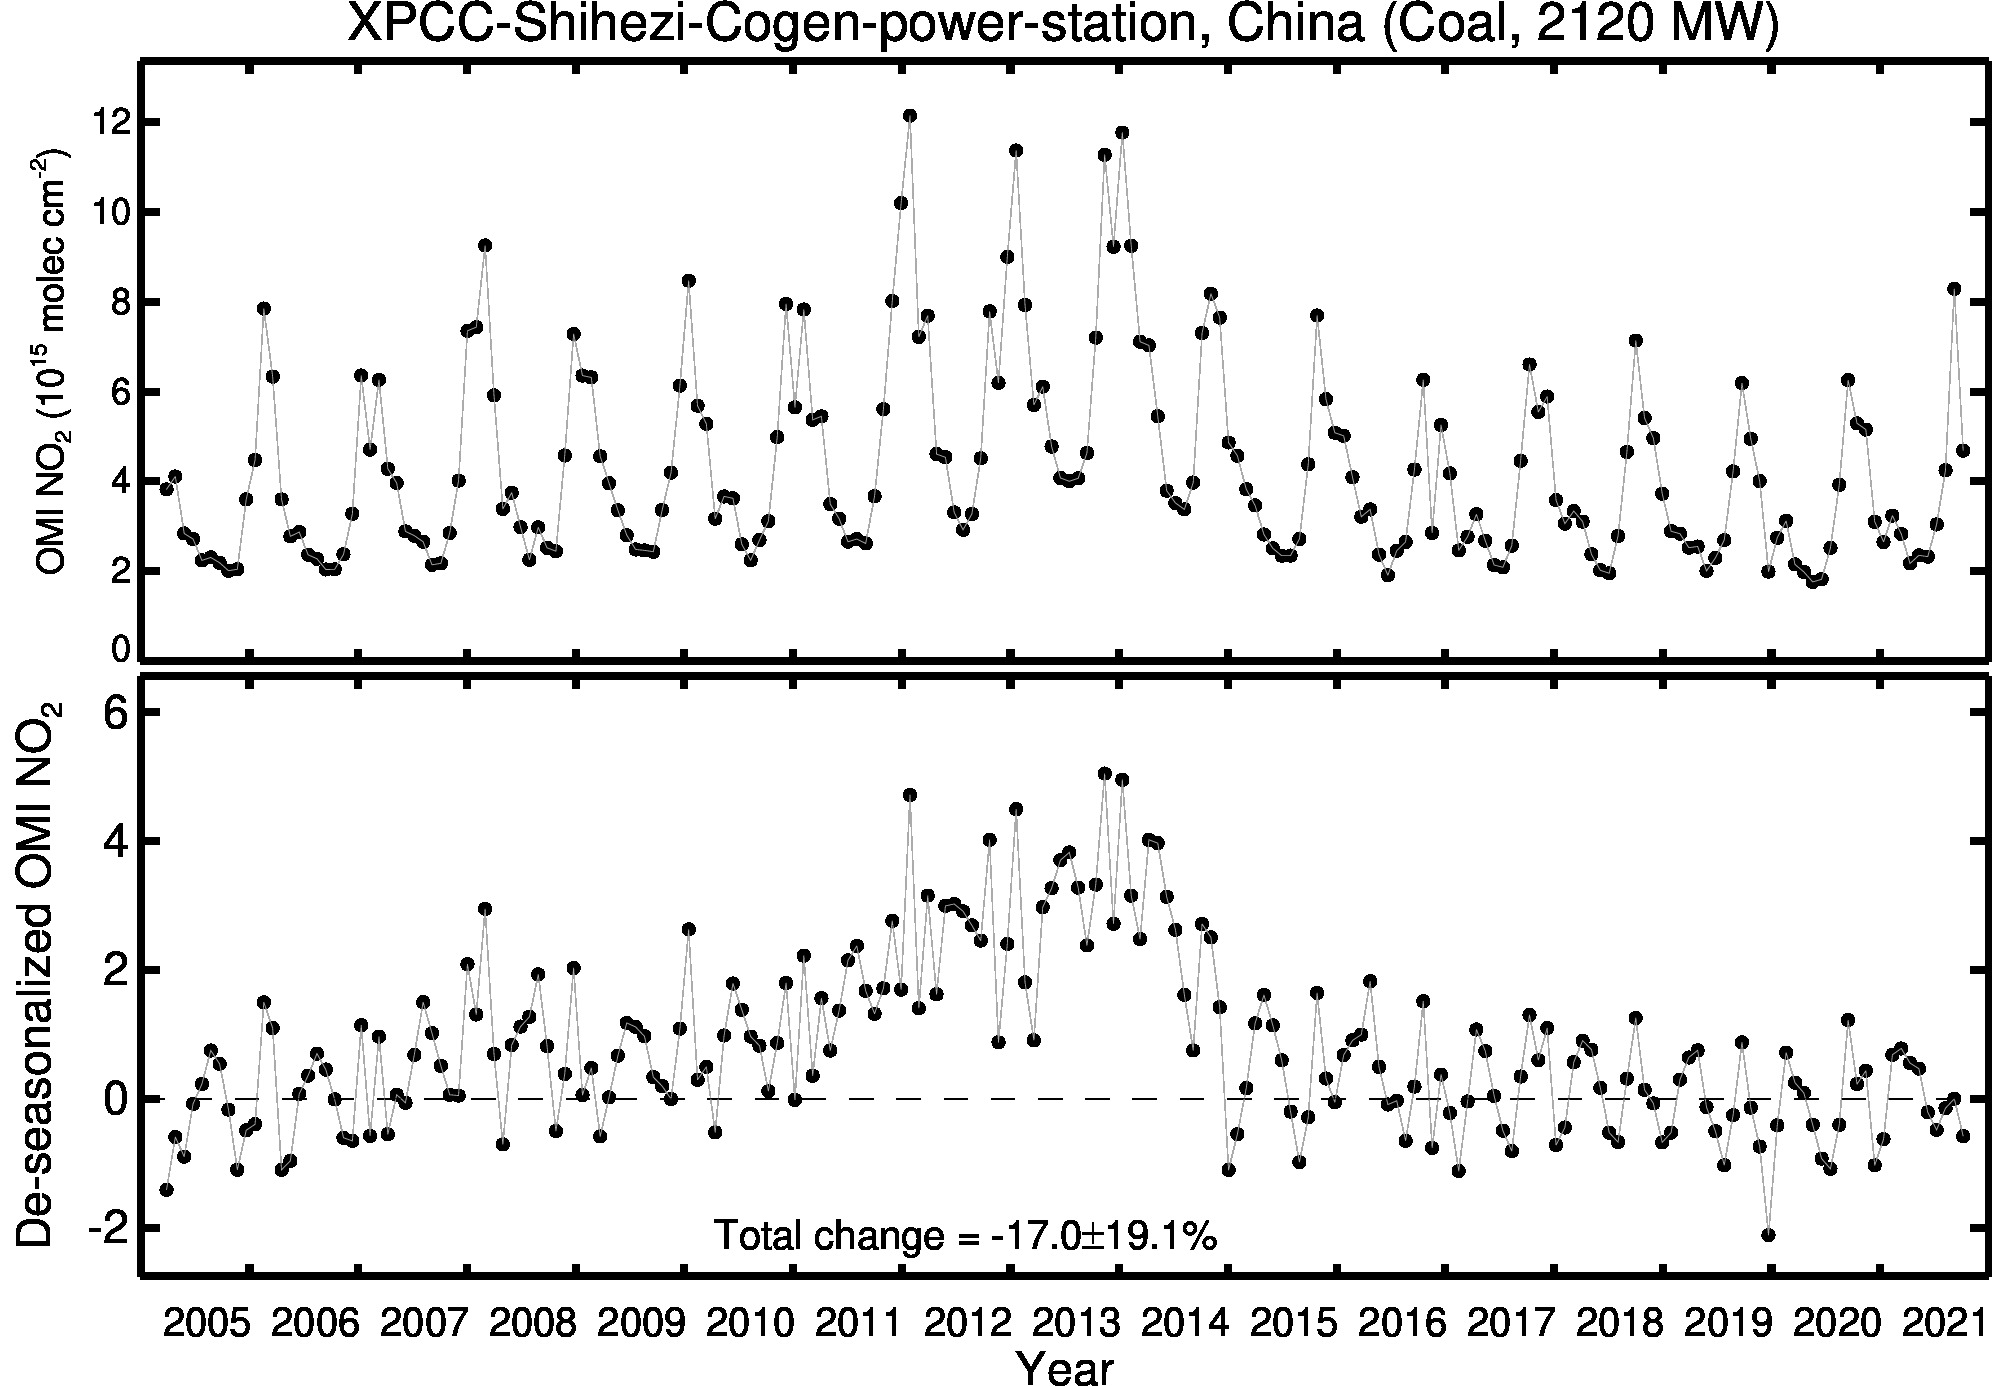 XPCC Shihezi Cogen power station Line Plot 2005-2021